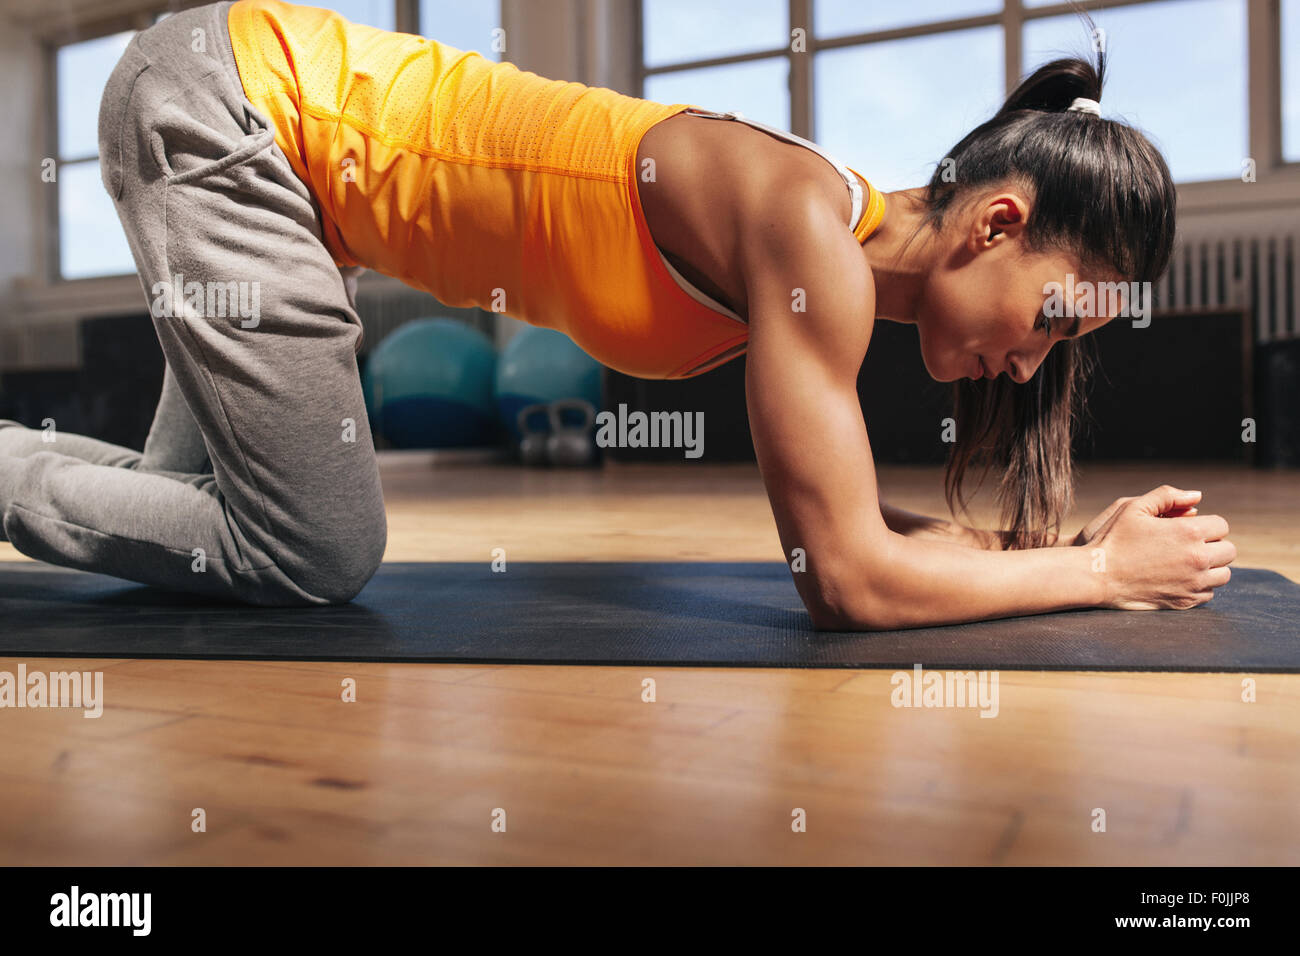 Mujer joven ejercer en fitness mat. Fuerte joven atleta femenina haciendo core ejercitarse en el gimnasio. Foto de stock